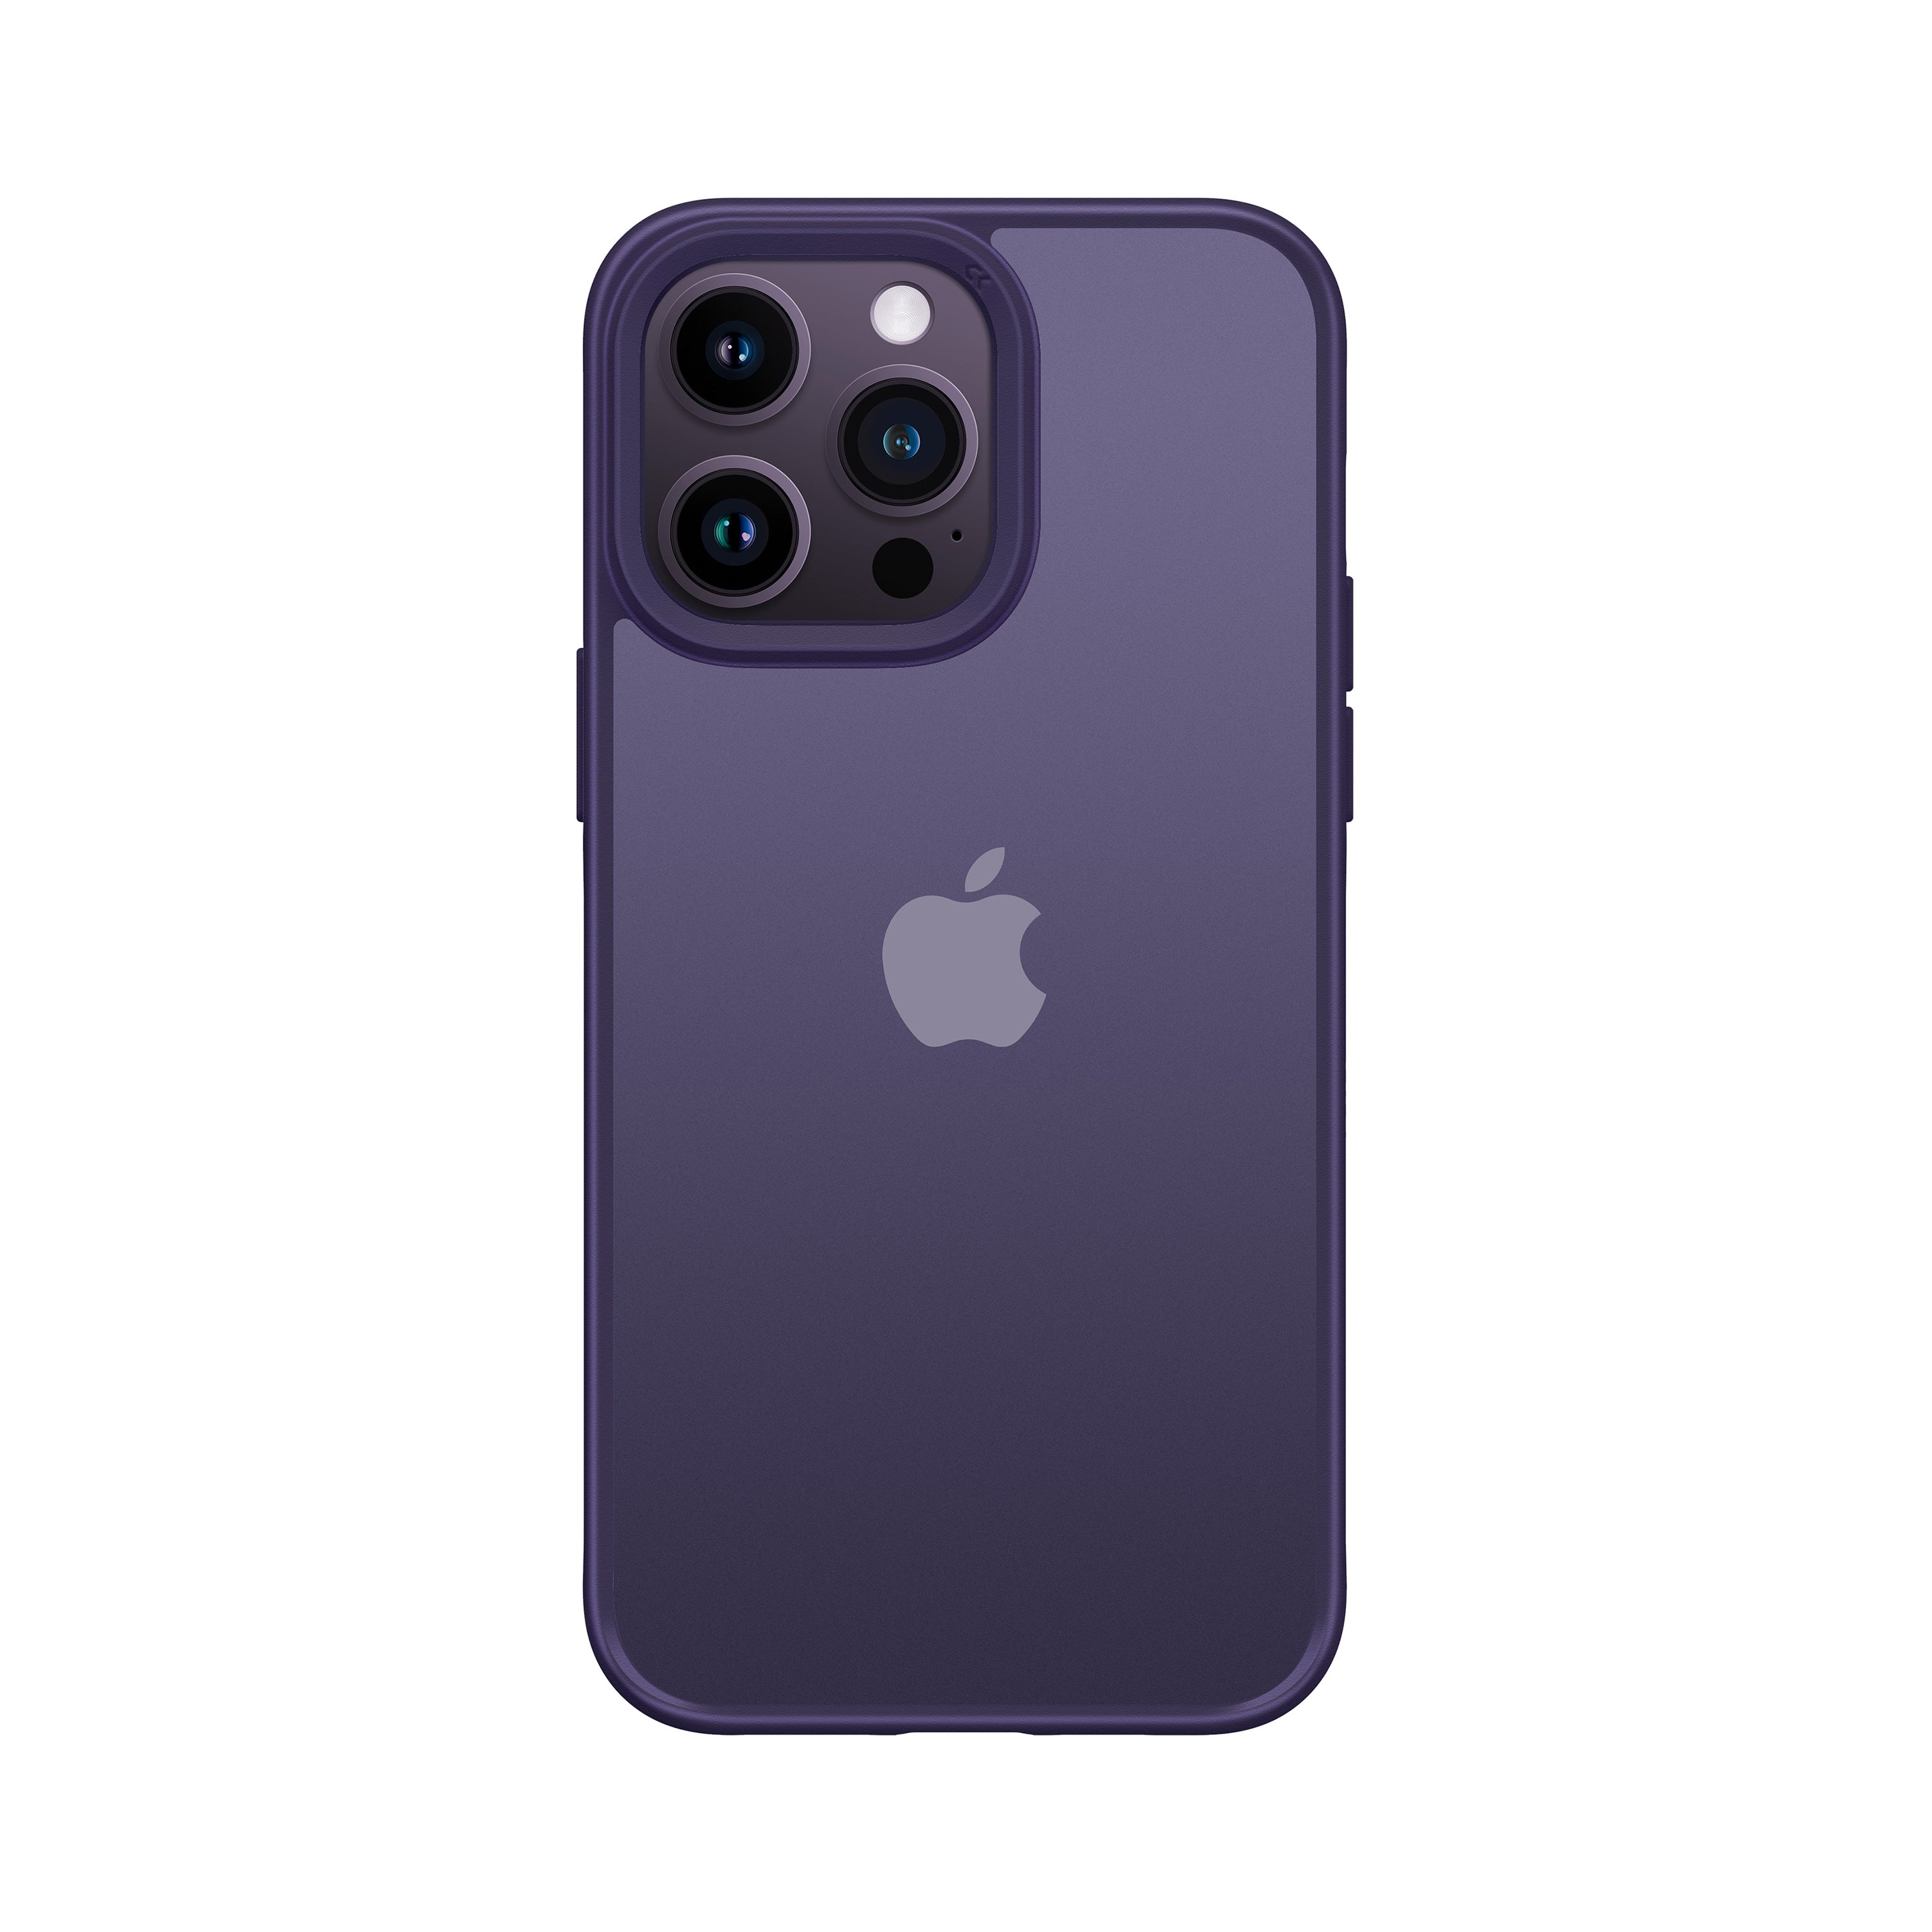 CASEKOO iPhone Matte Anti-Fingerprint Slim Phone Case, Shockproof, and Wireless Charging Compatible - Kooshock Series